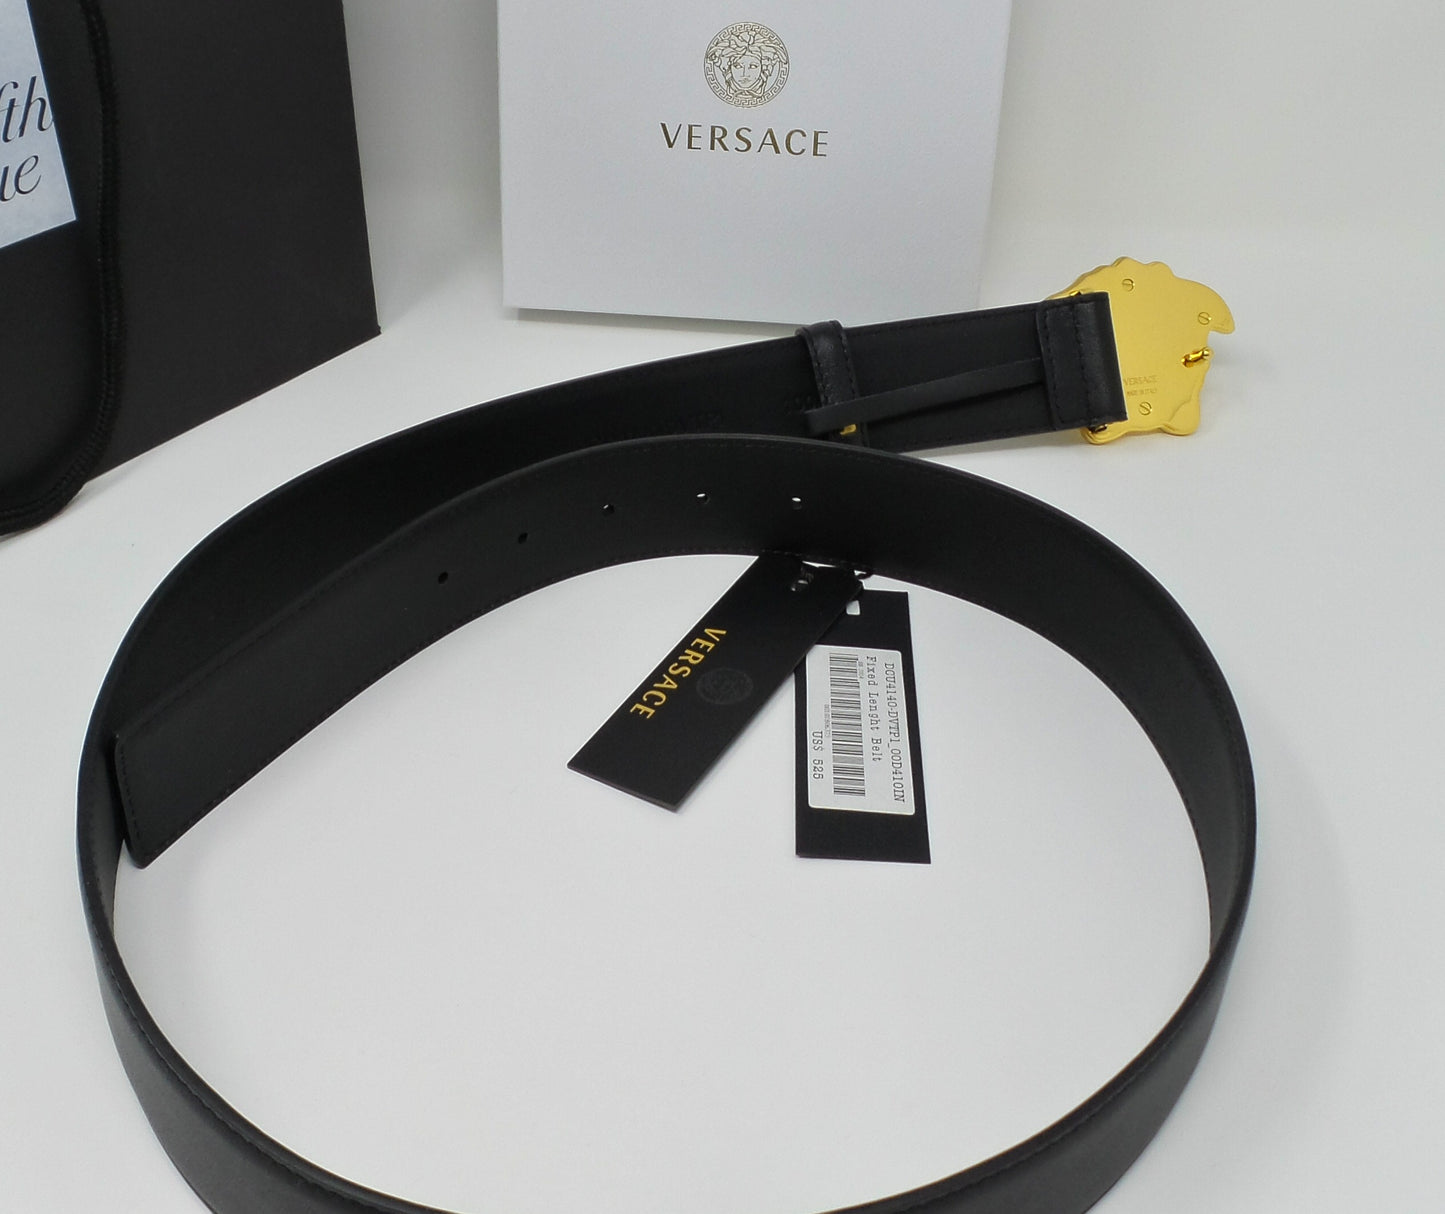 Black Leather Belt With Gold Medusa Buckle Unisex